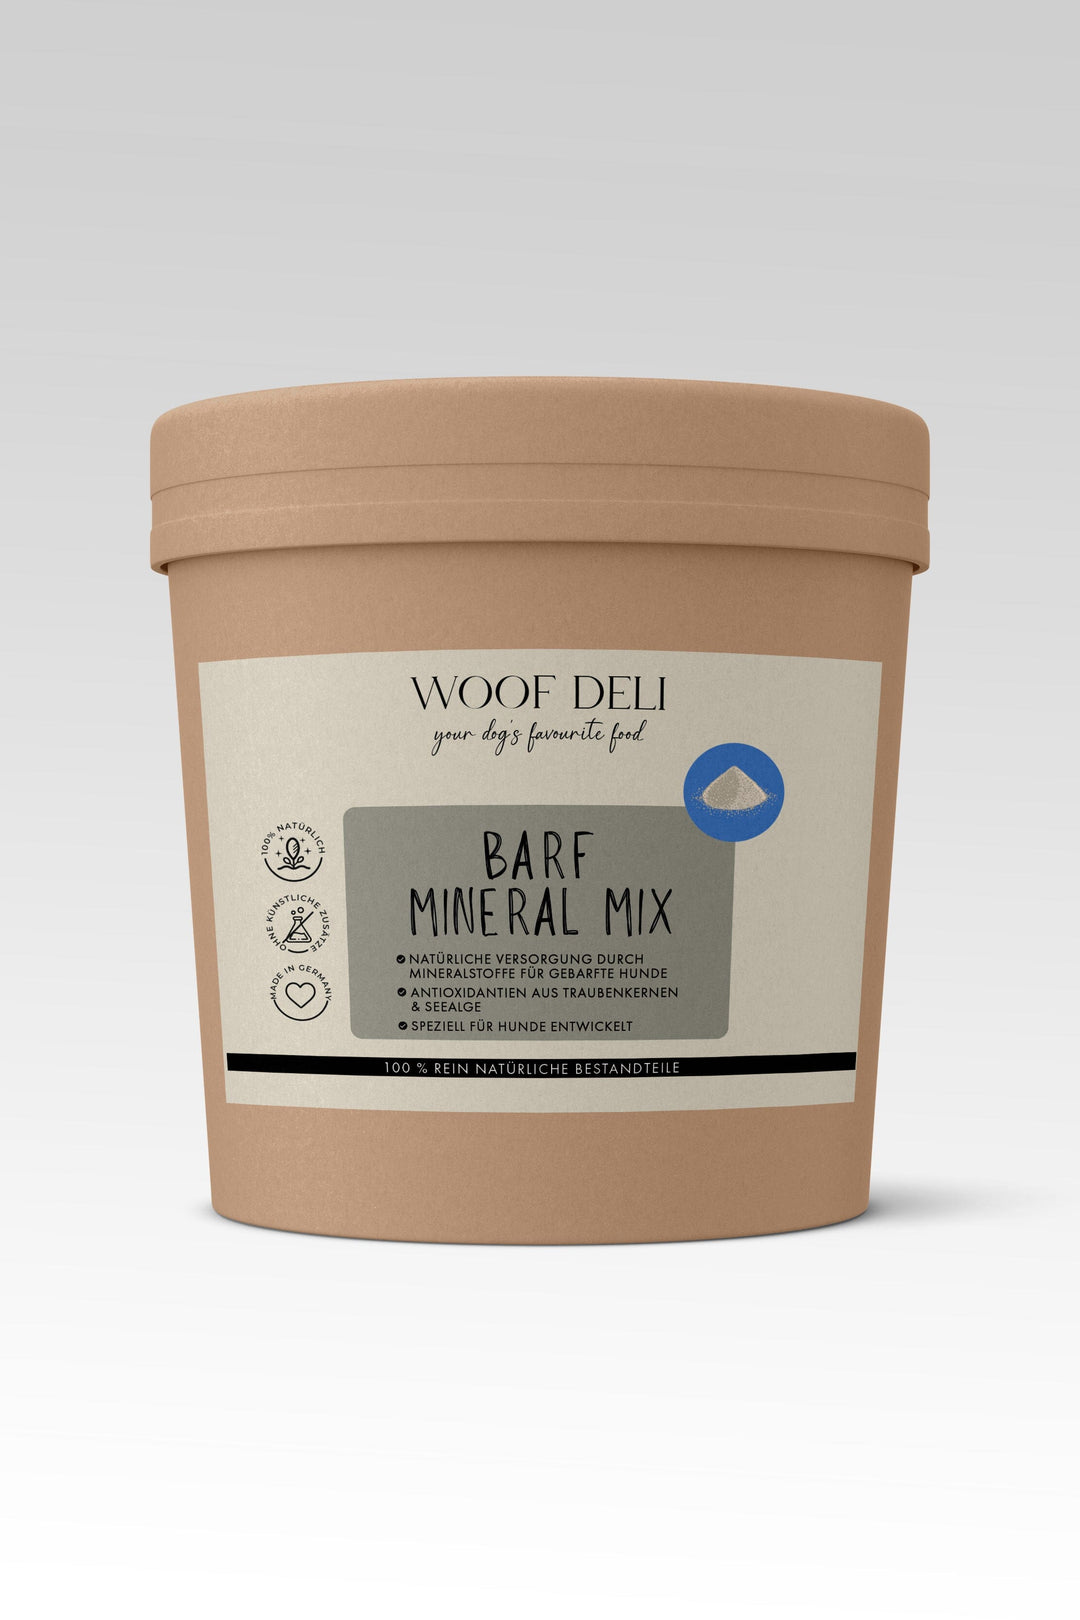 BARF Mineral-Mix WOOF DELI 500g 